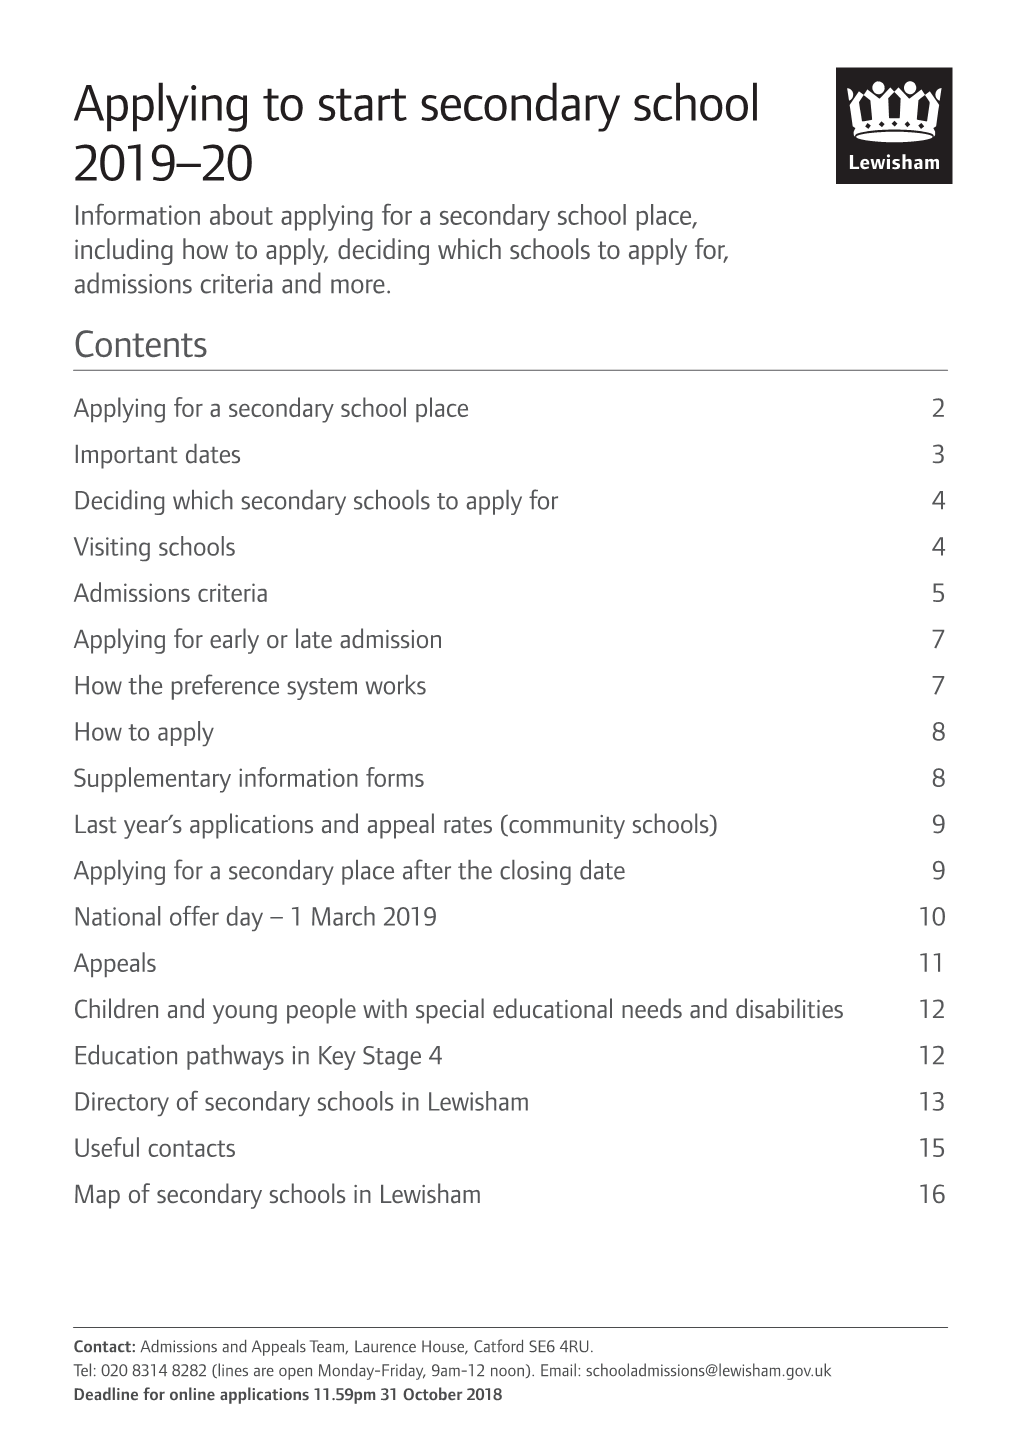 Applying to Start Secondary School 2019–20